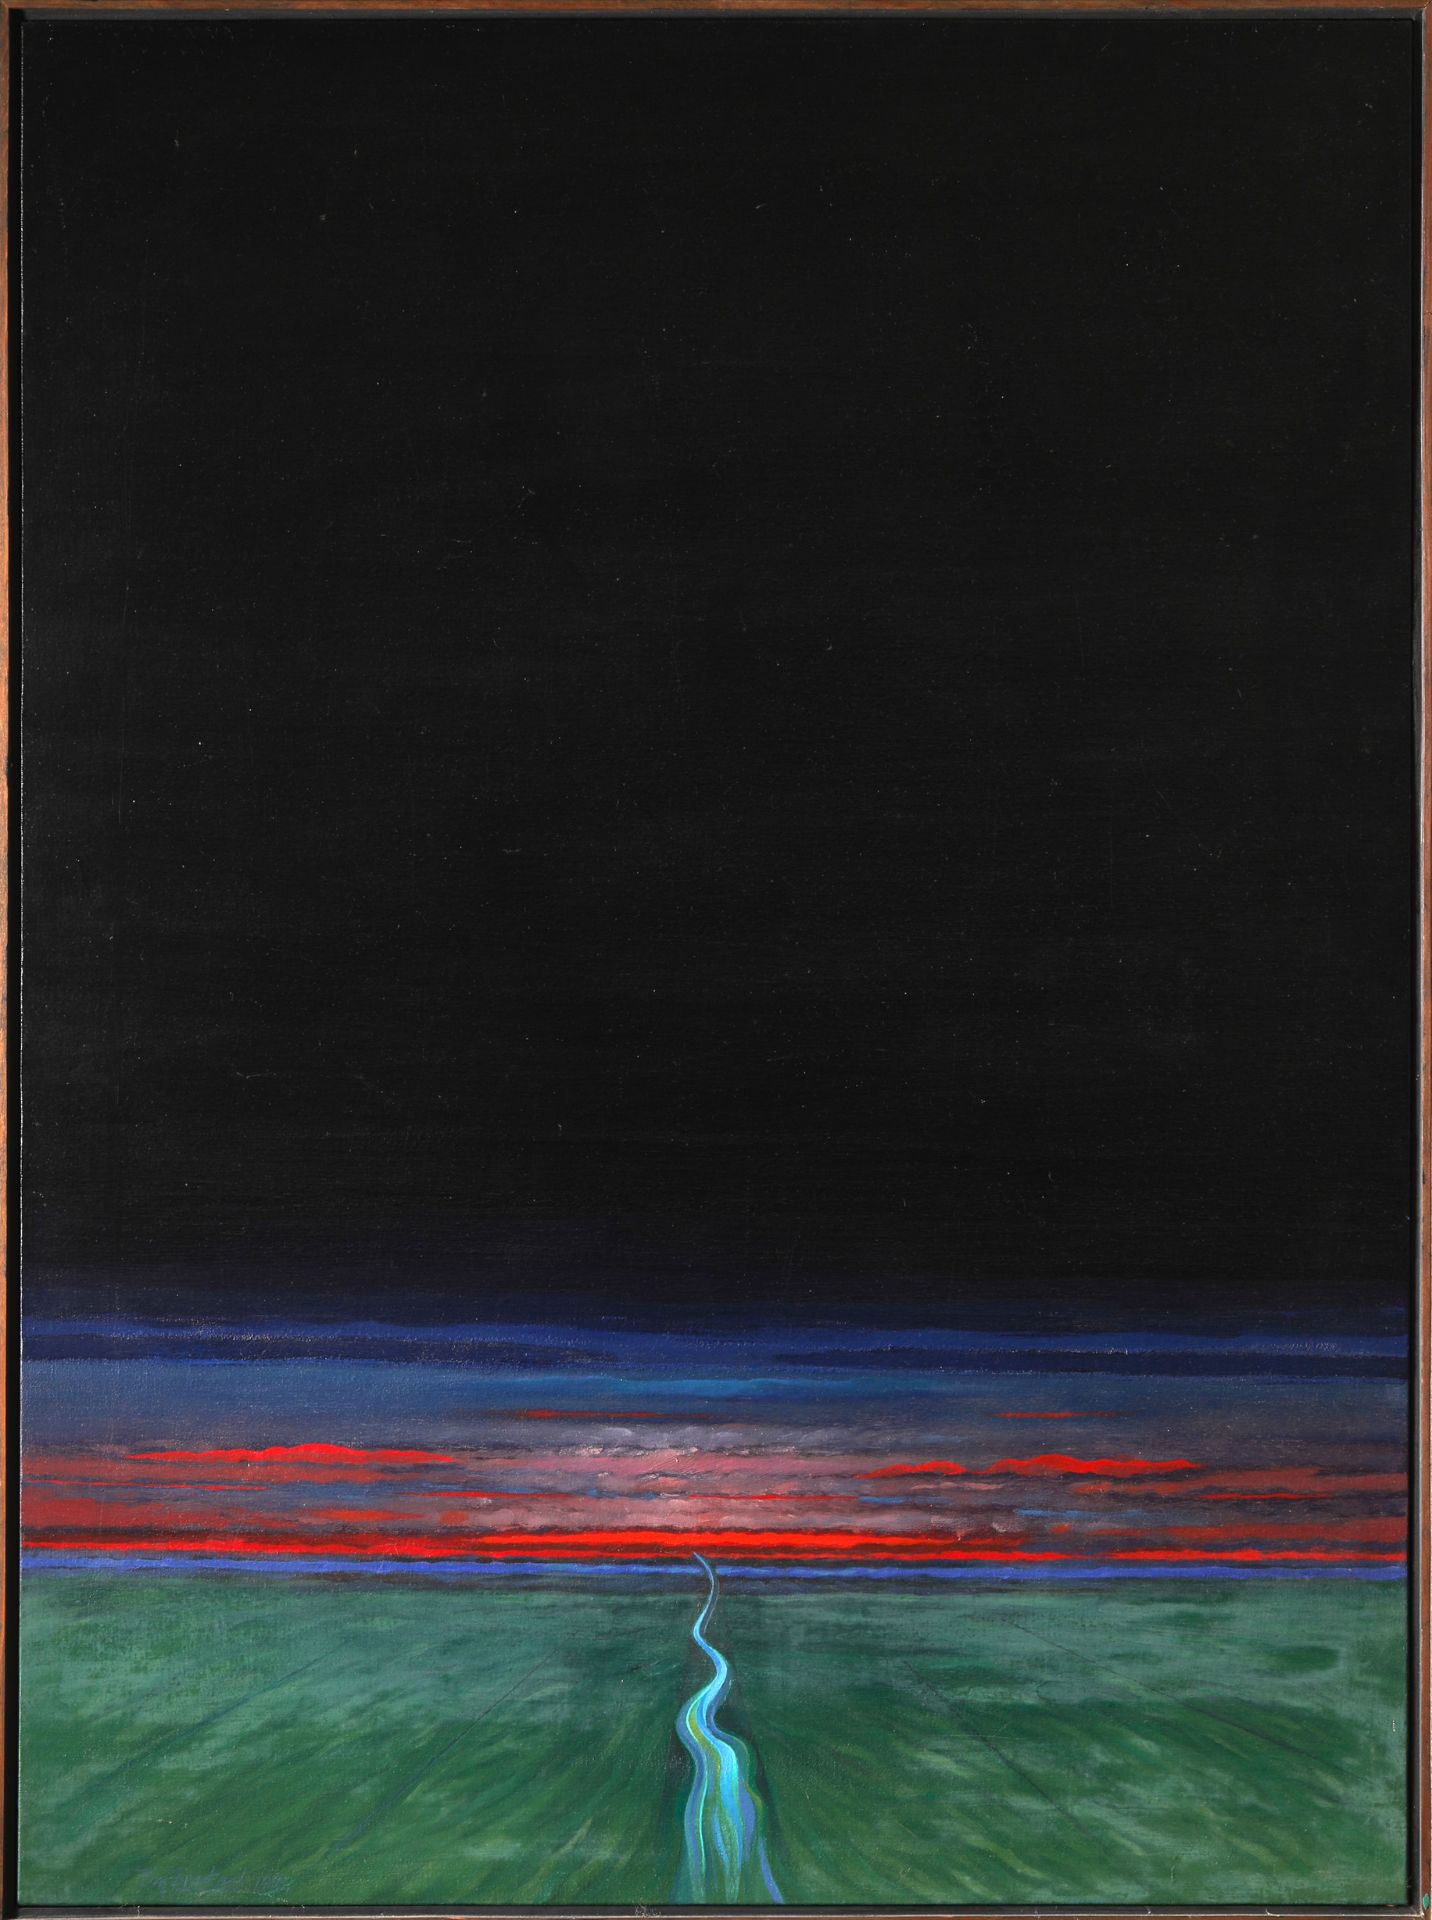 Om Prakash Sharma, End of the Evening, 1991, Oil on canvas